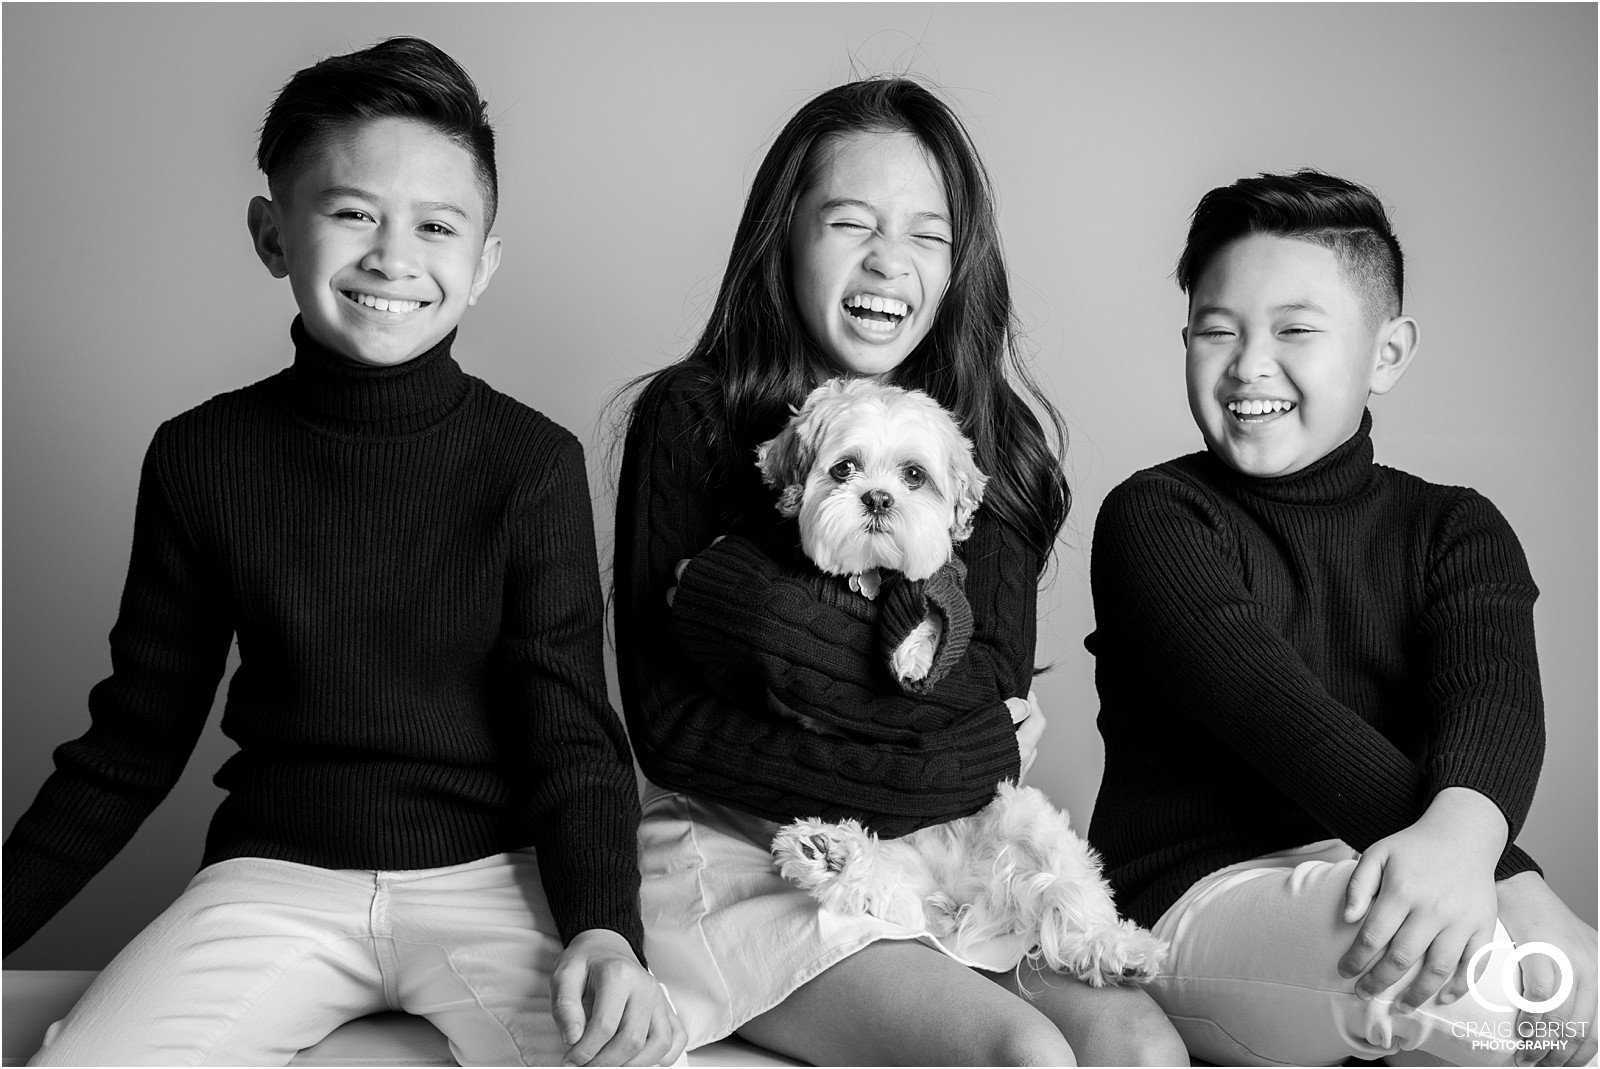 Studio Black and white bw portraits family kids models_0027.jpg